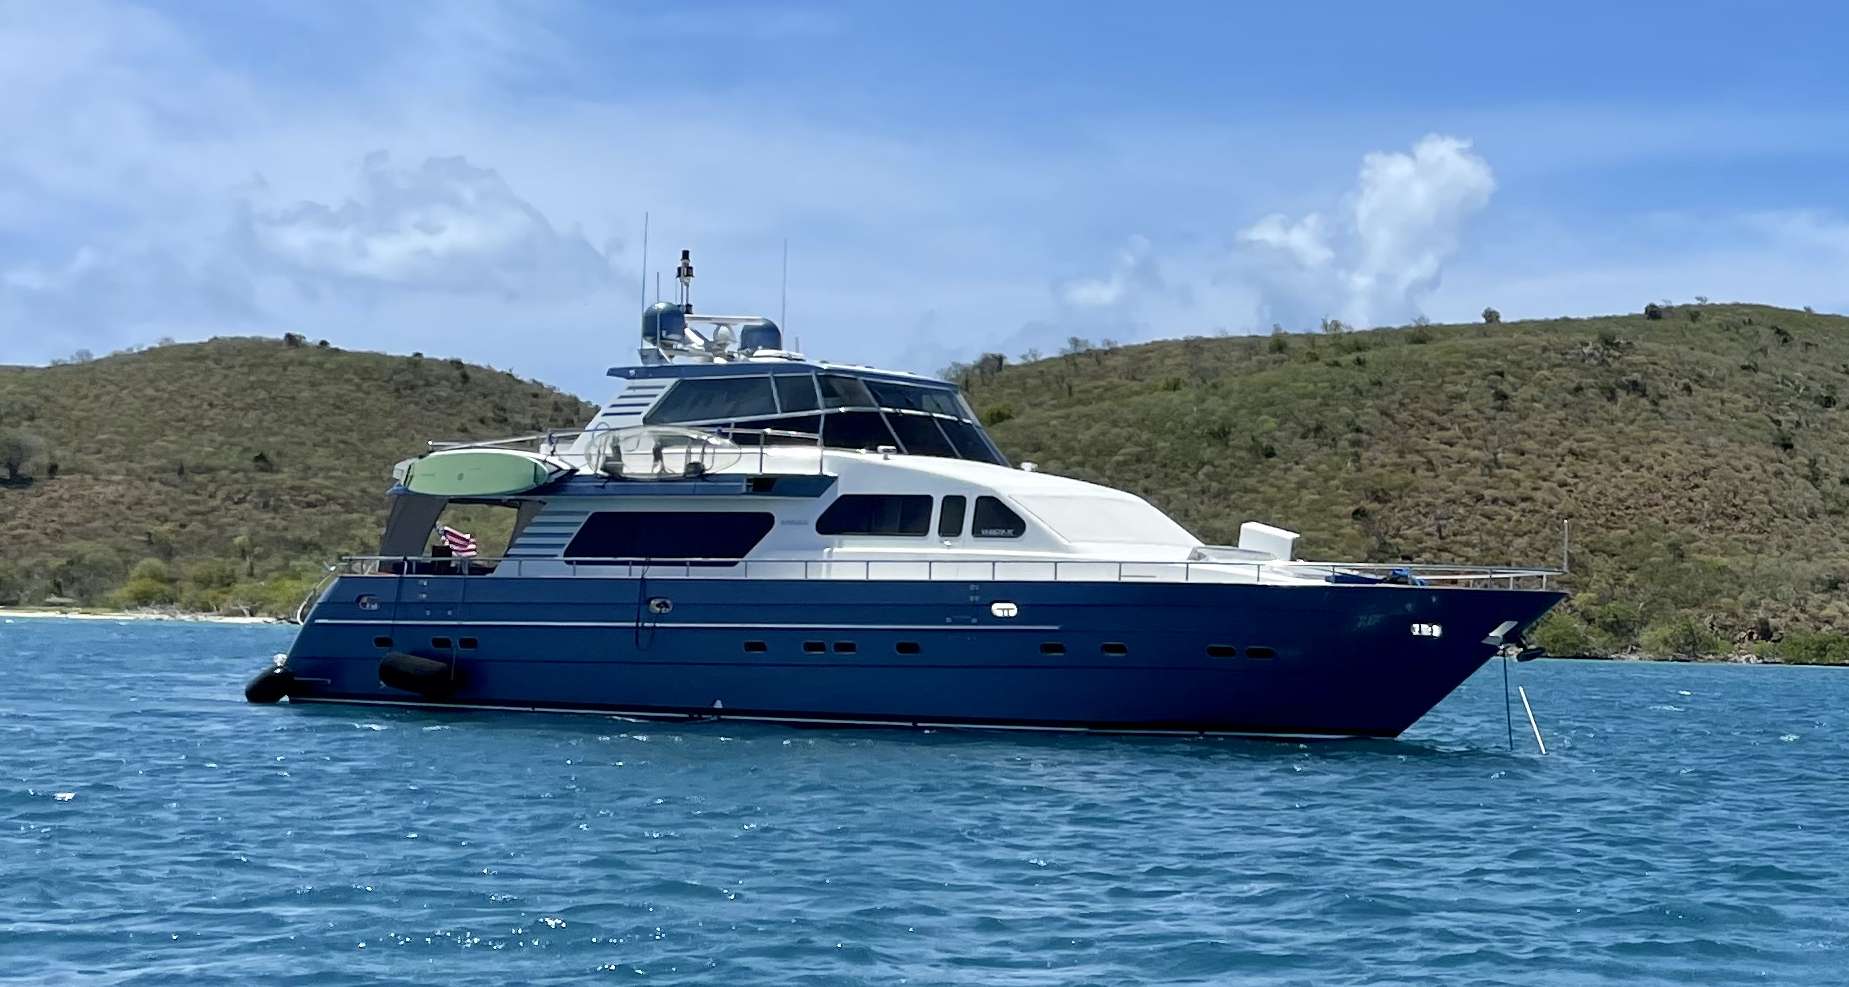 QARA - Superyacht charter British Virgin Island & Boat hire in Caribbean Virgin Islands 1